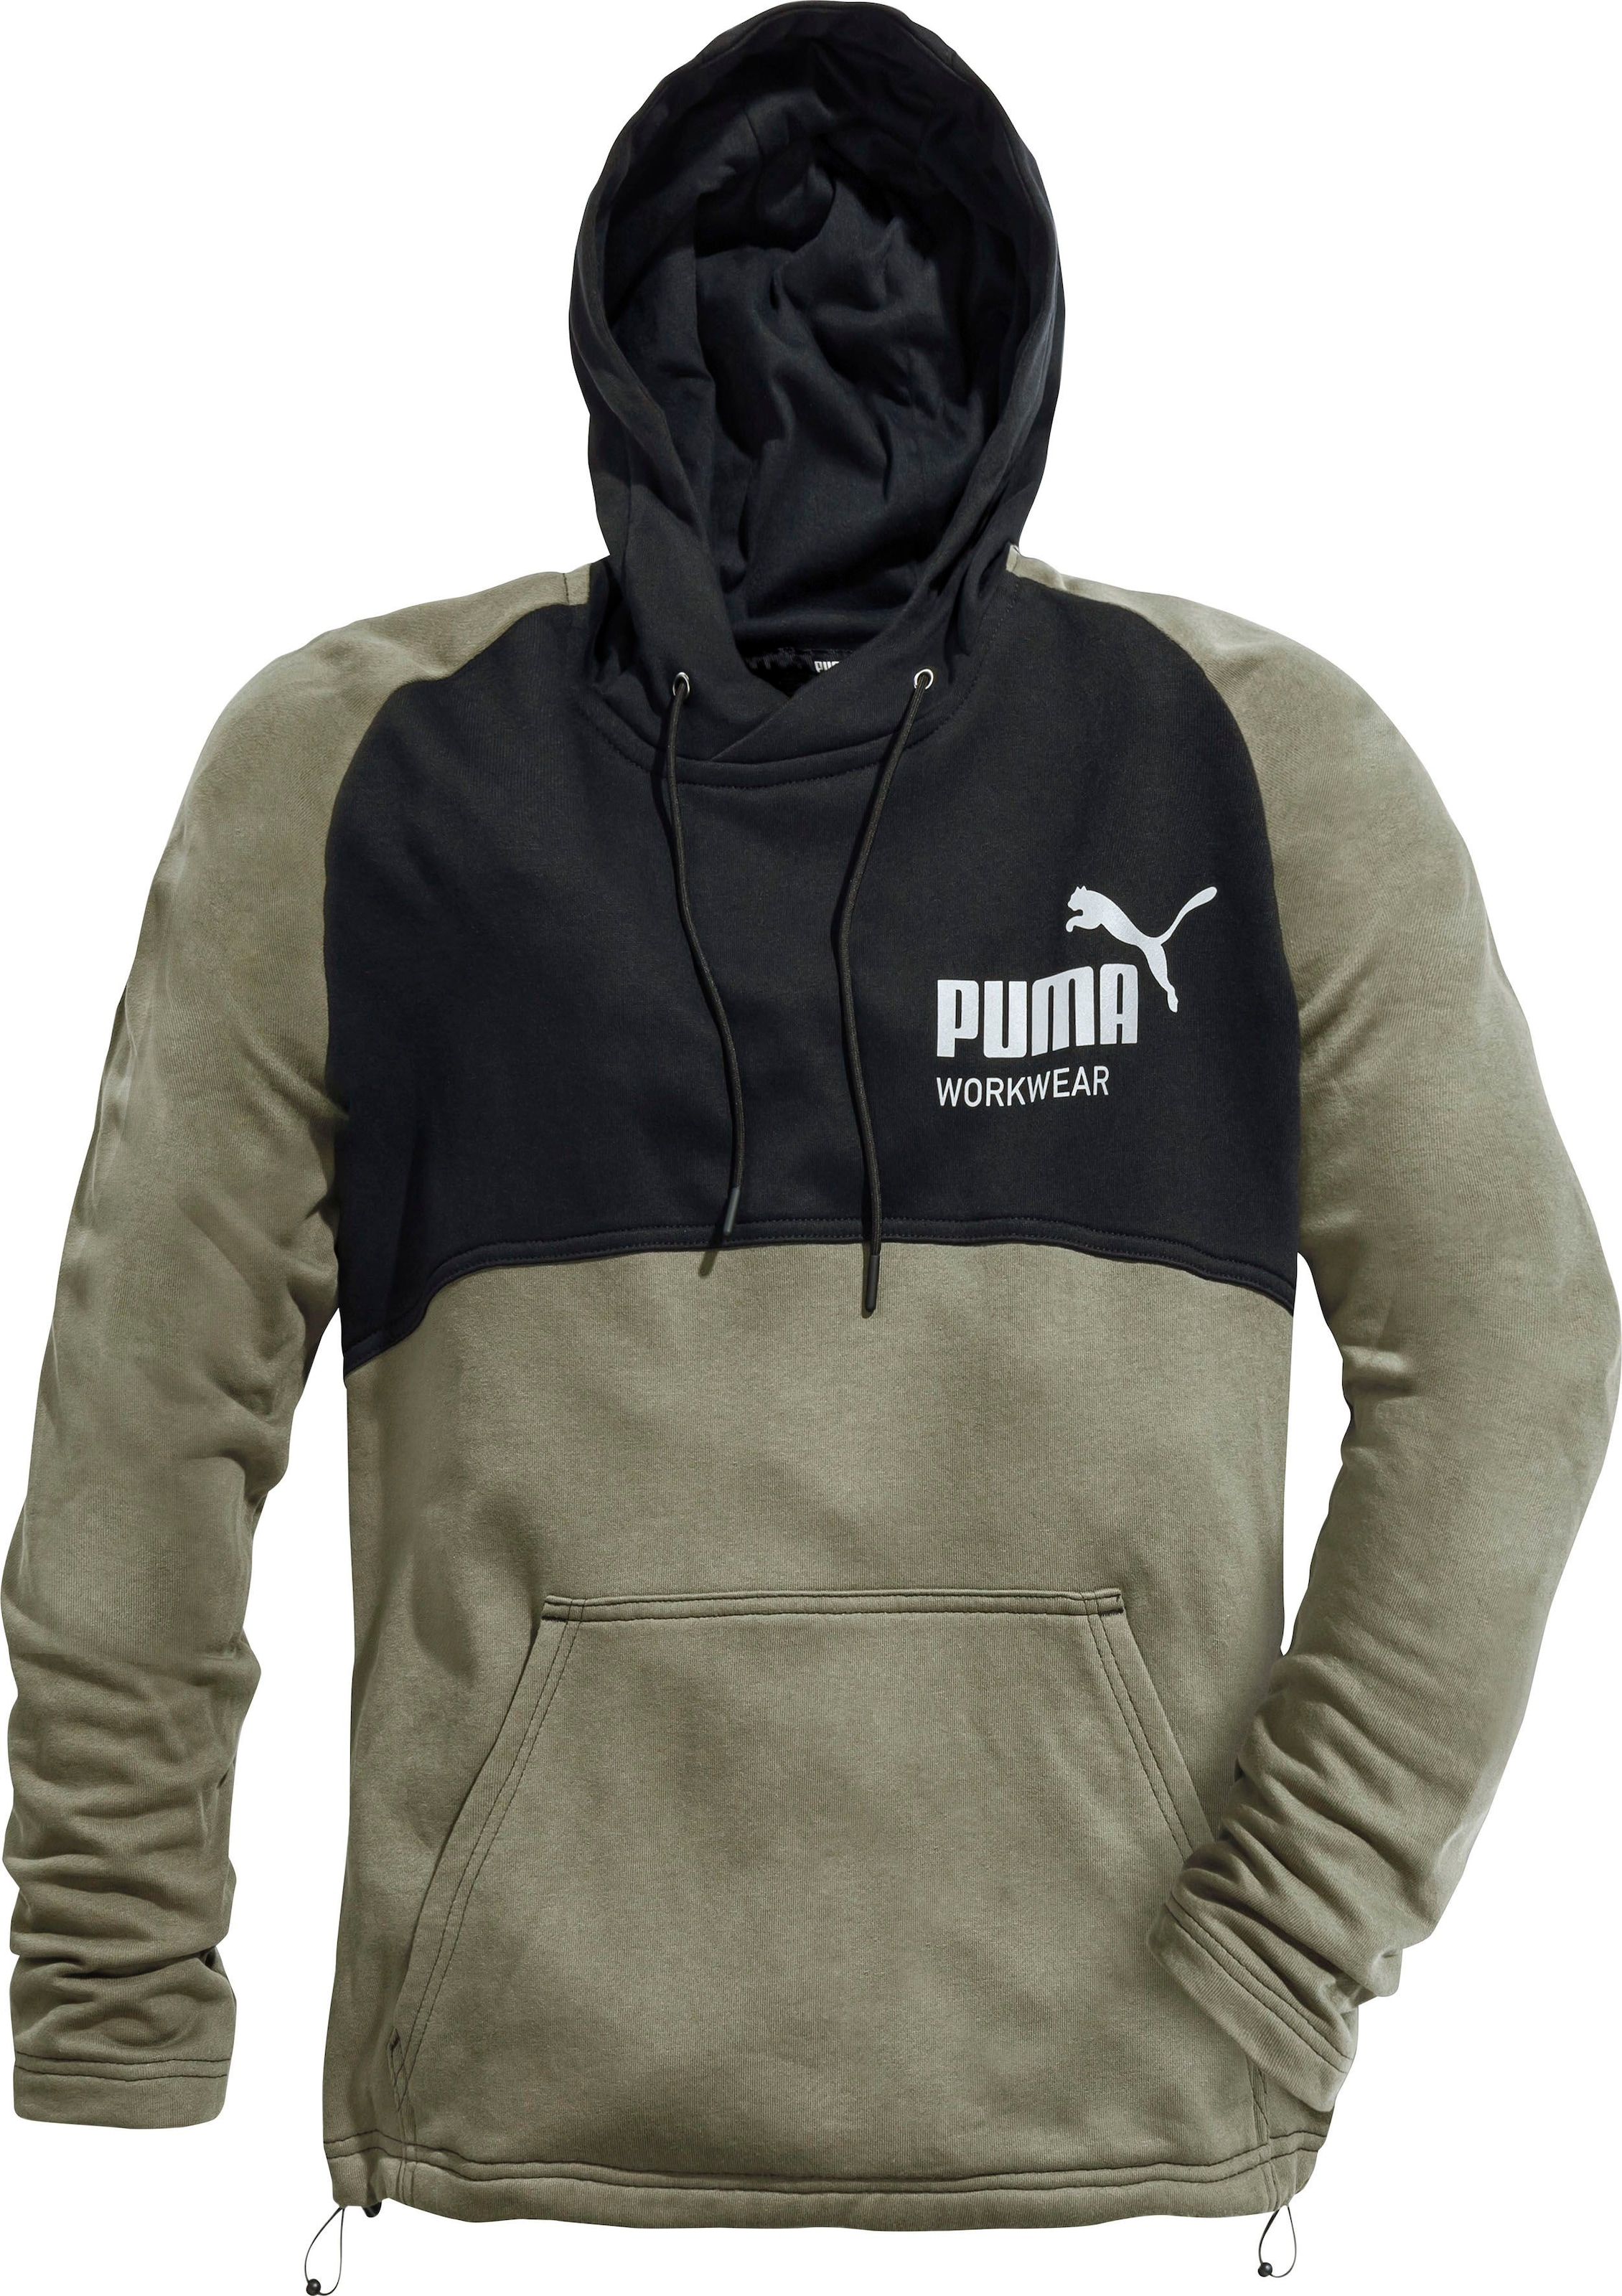 PUMA Workwear Hoodie »CHAMP«, gefütterte Kapuze, Kangaroo-Tasche, verstellbarer Saum